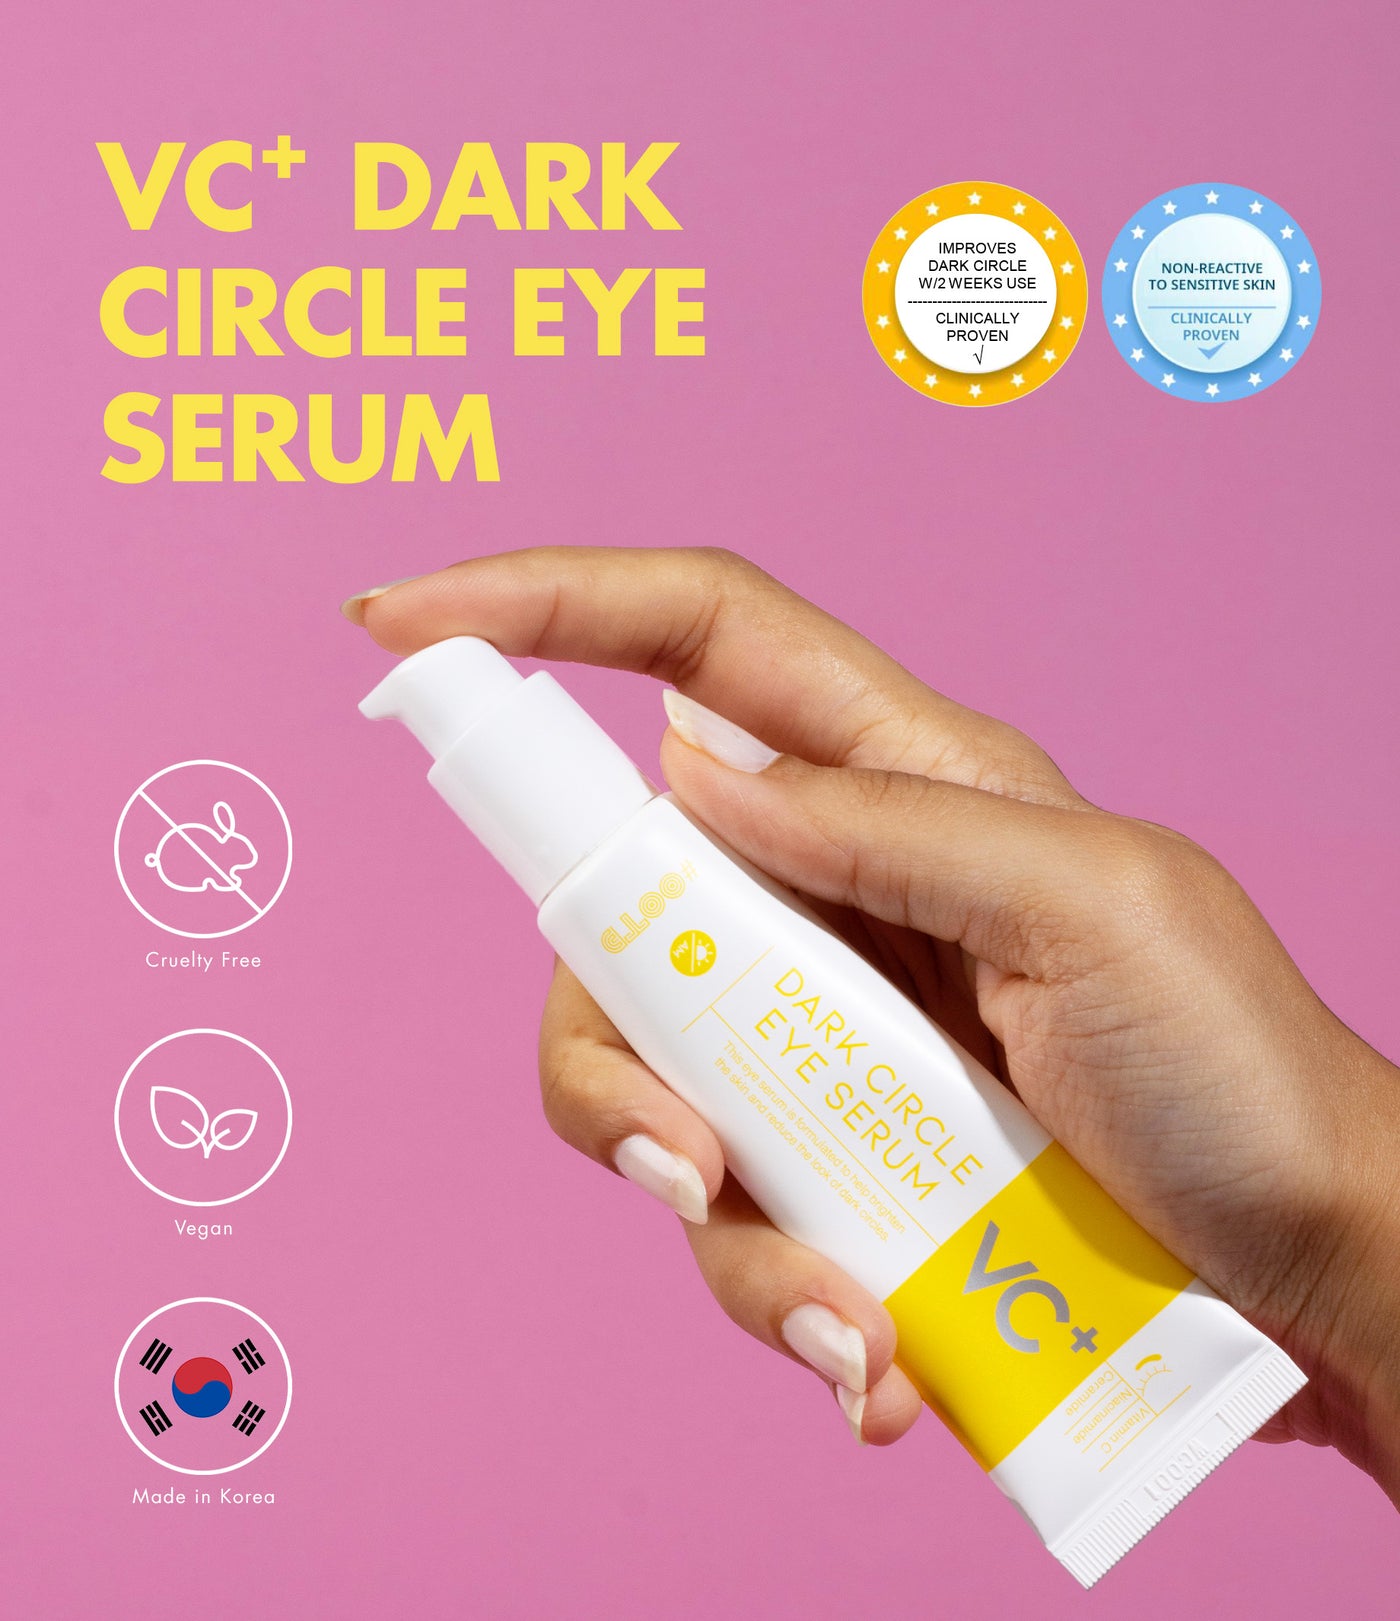 OOTD Dark Circle Eye Serum (VC+)